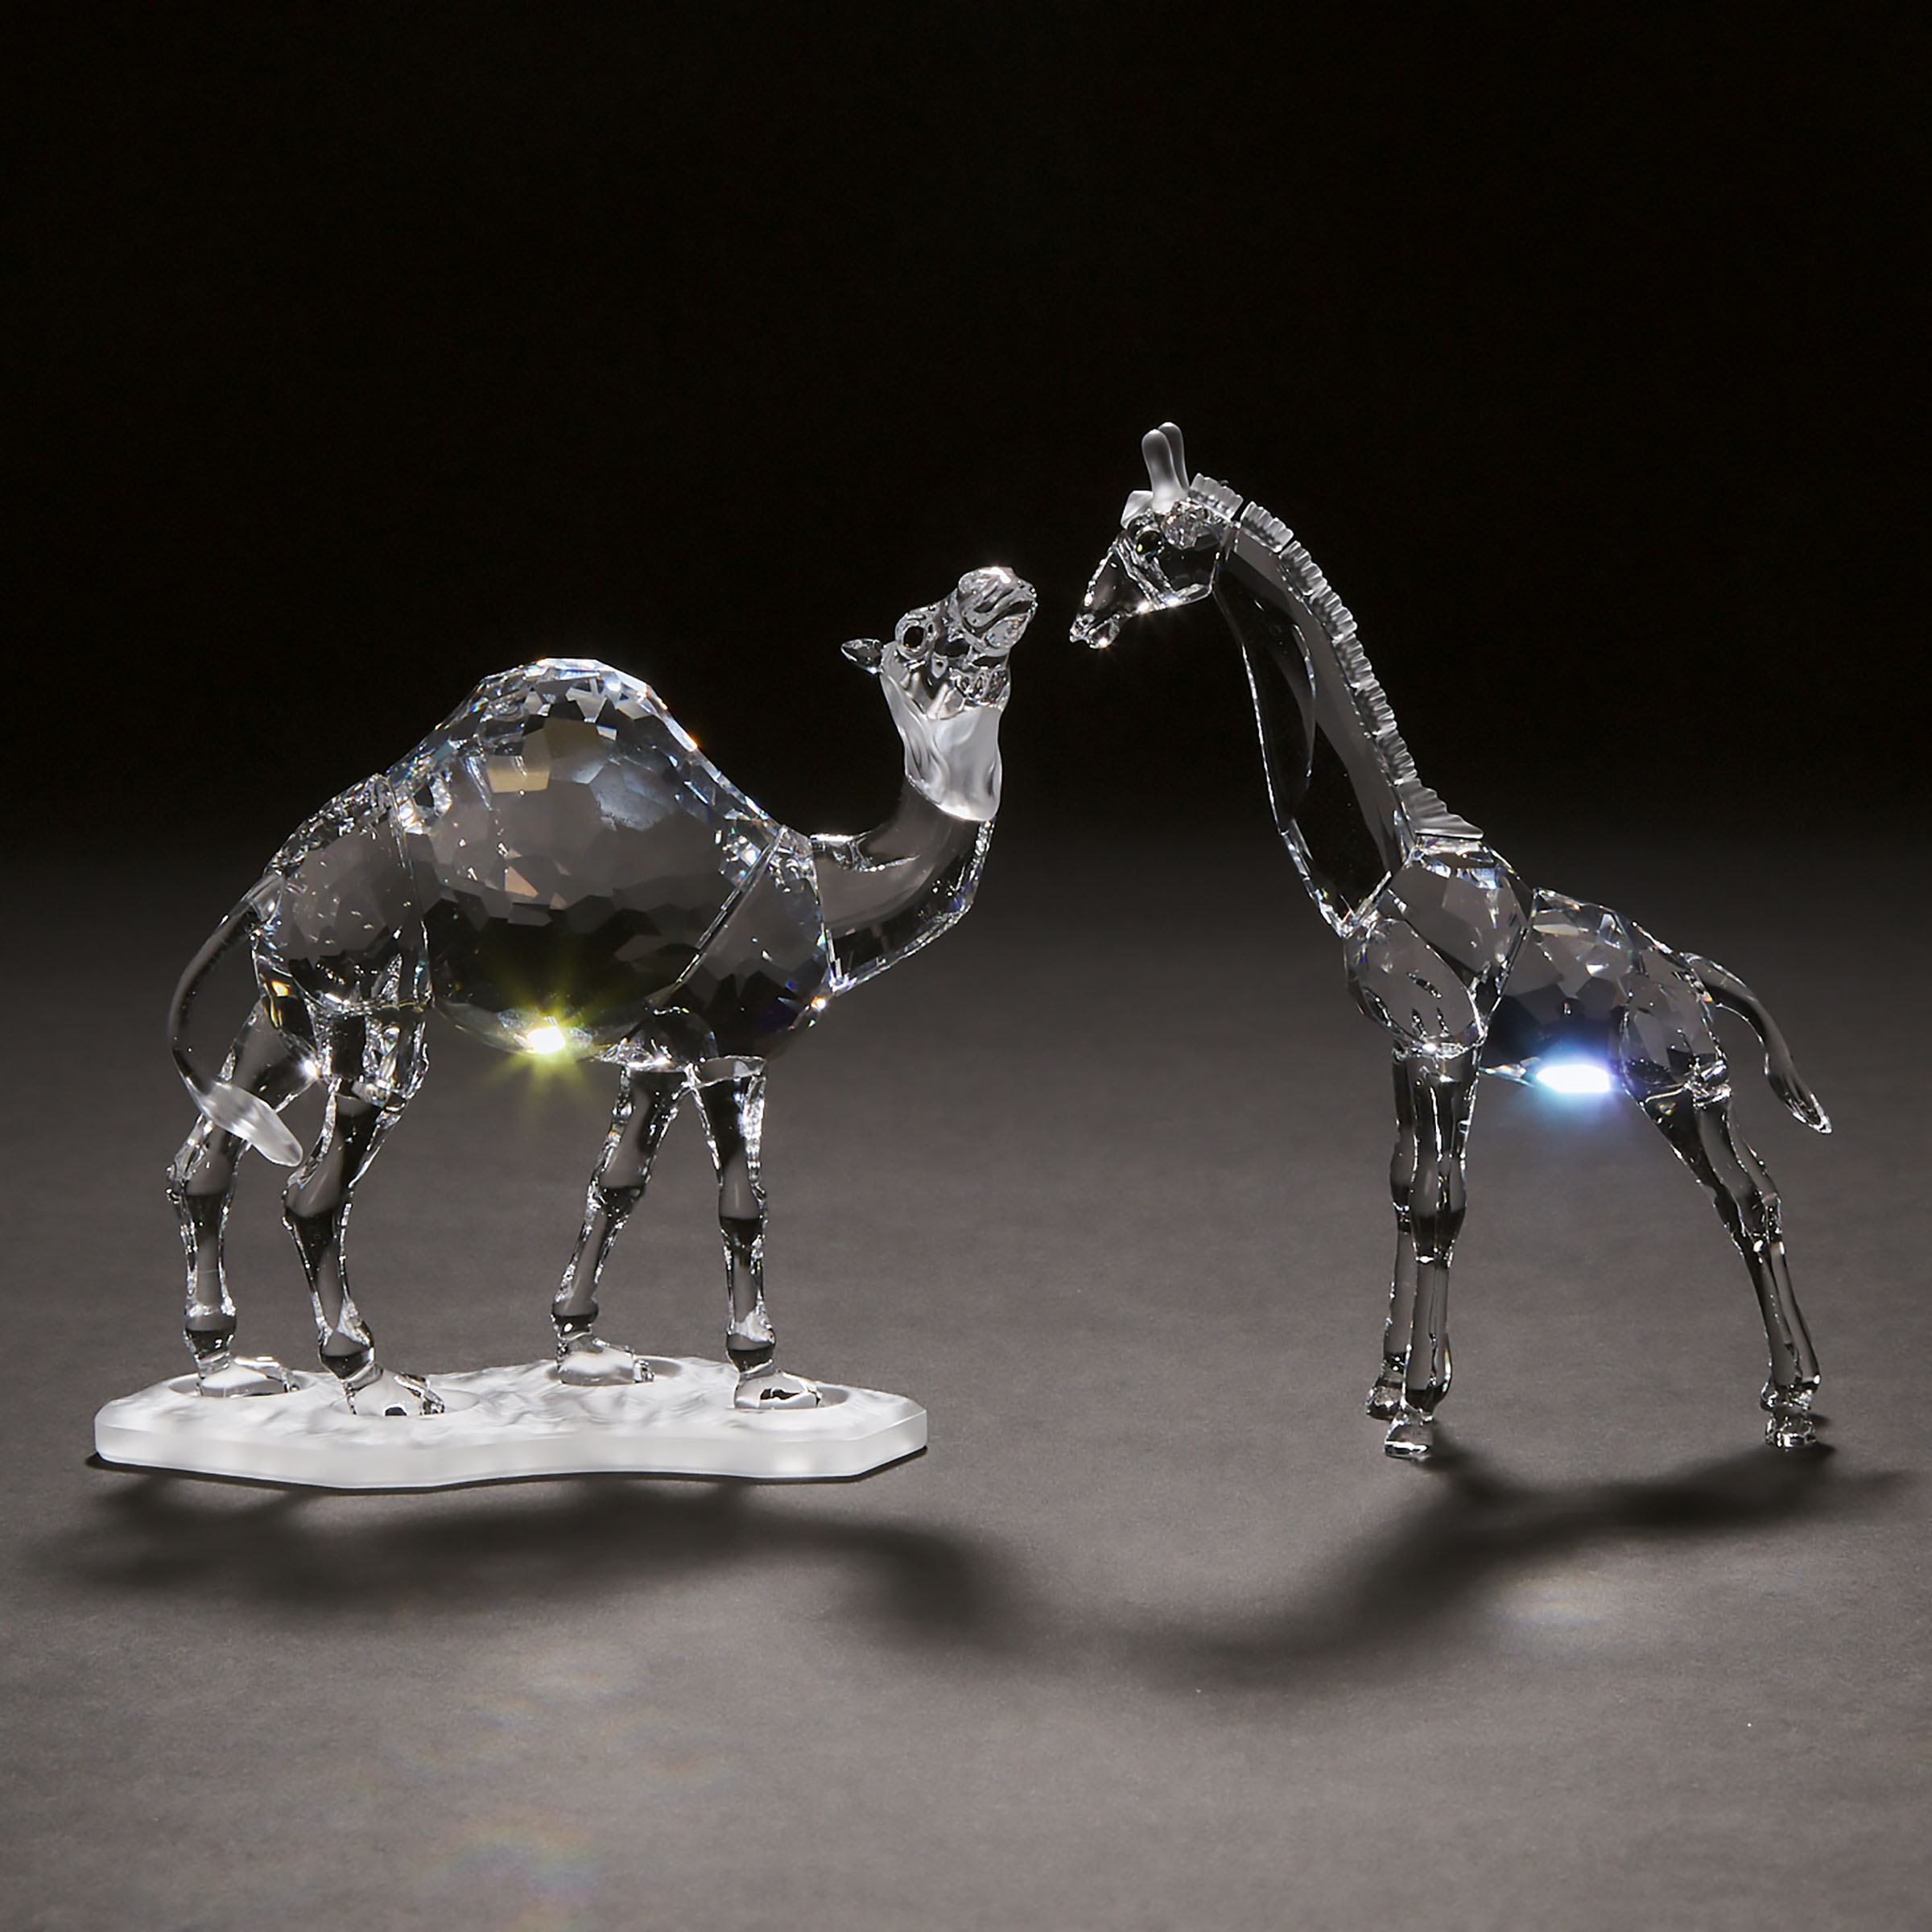 Swarovski Crystal Camel and Giraffe, 2004/2005